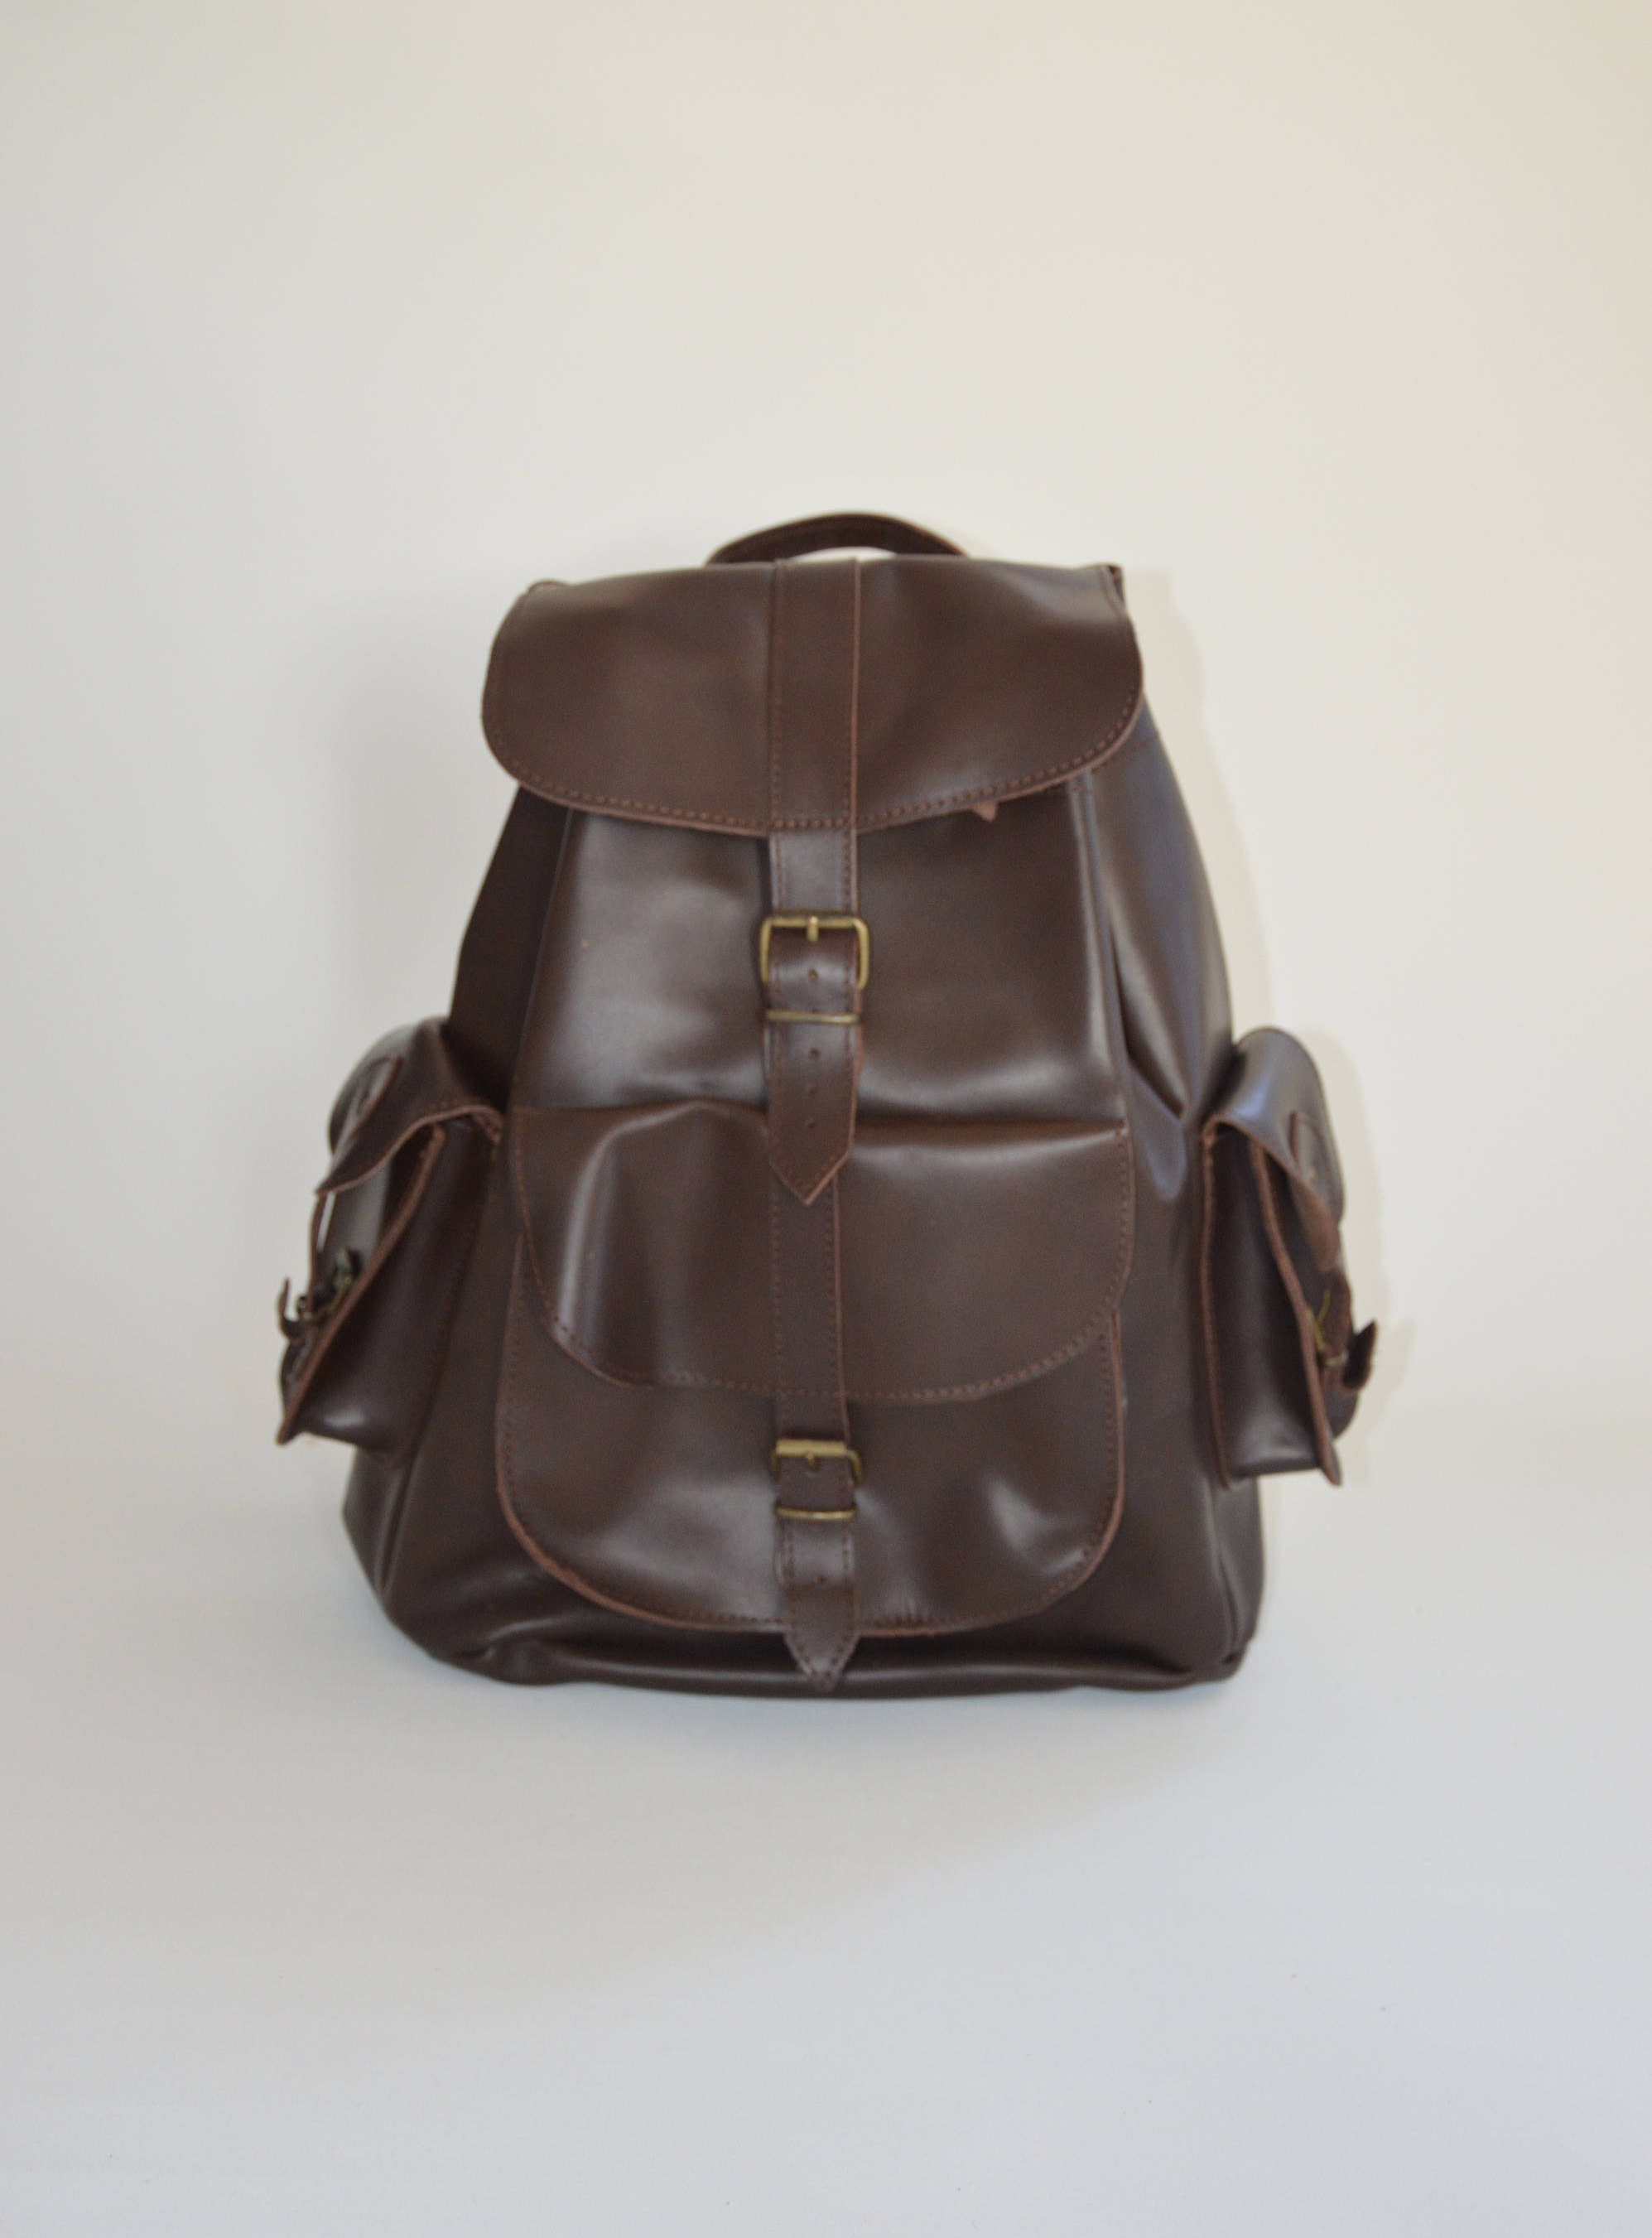 Backpack for Men Brown Leather Backpack Leather Rucksack | Etsy